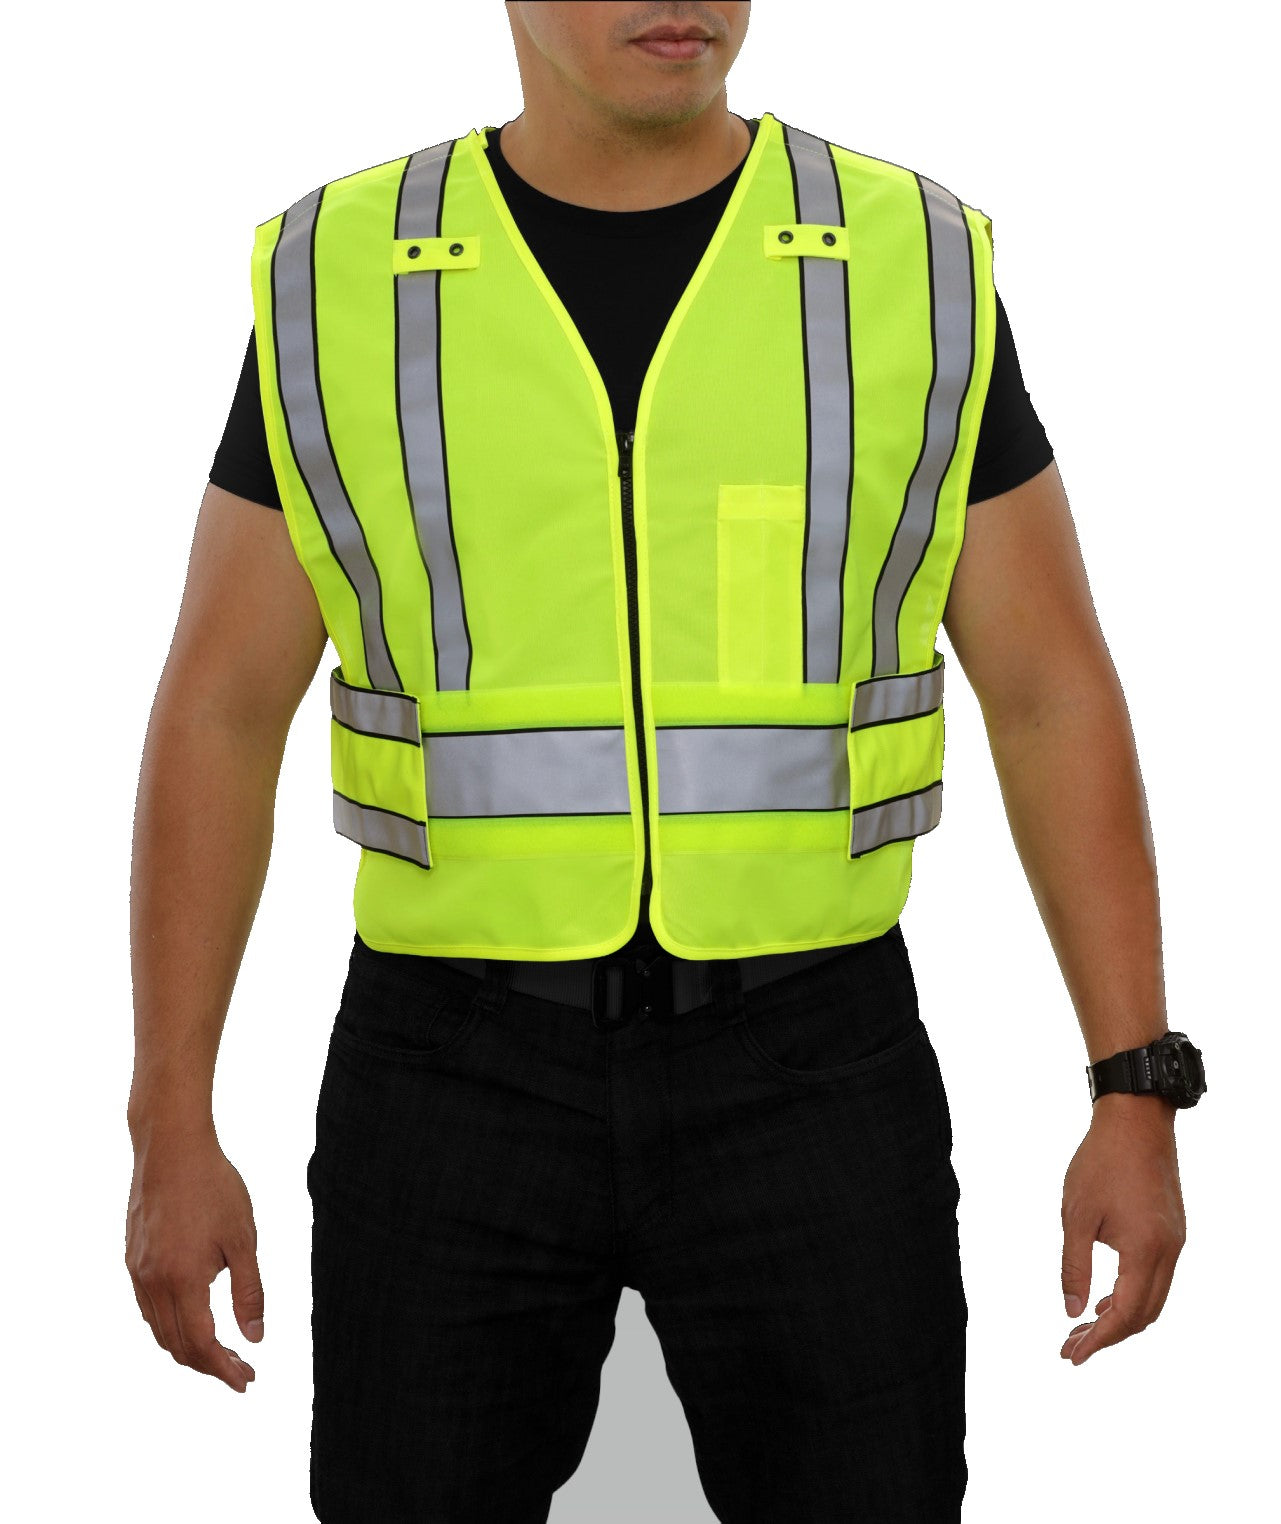 Lime Public Safety Tactical Vest: 551STLM – Reflective Apparel Inc